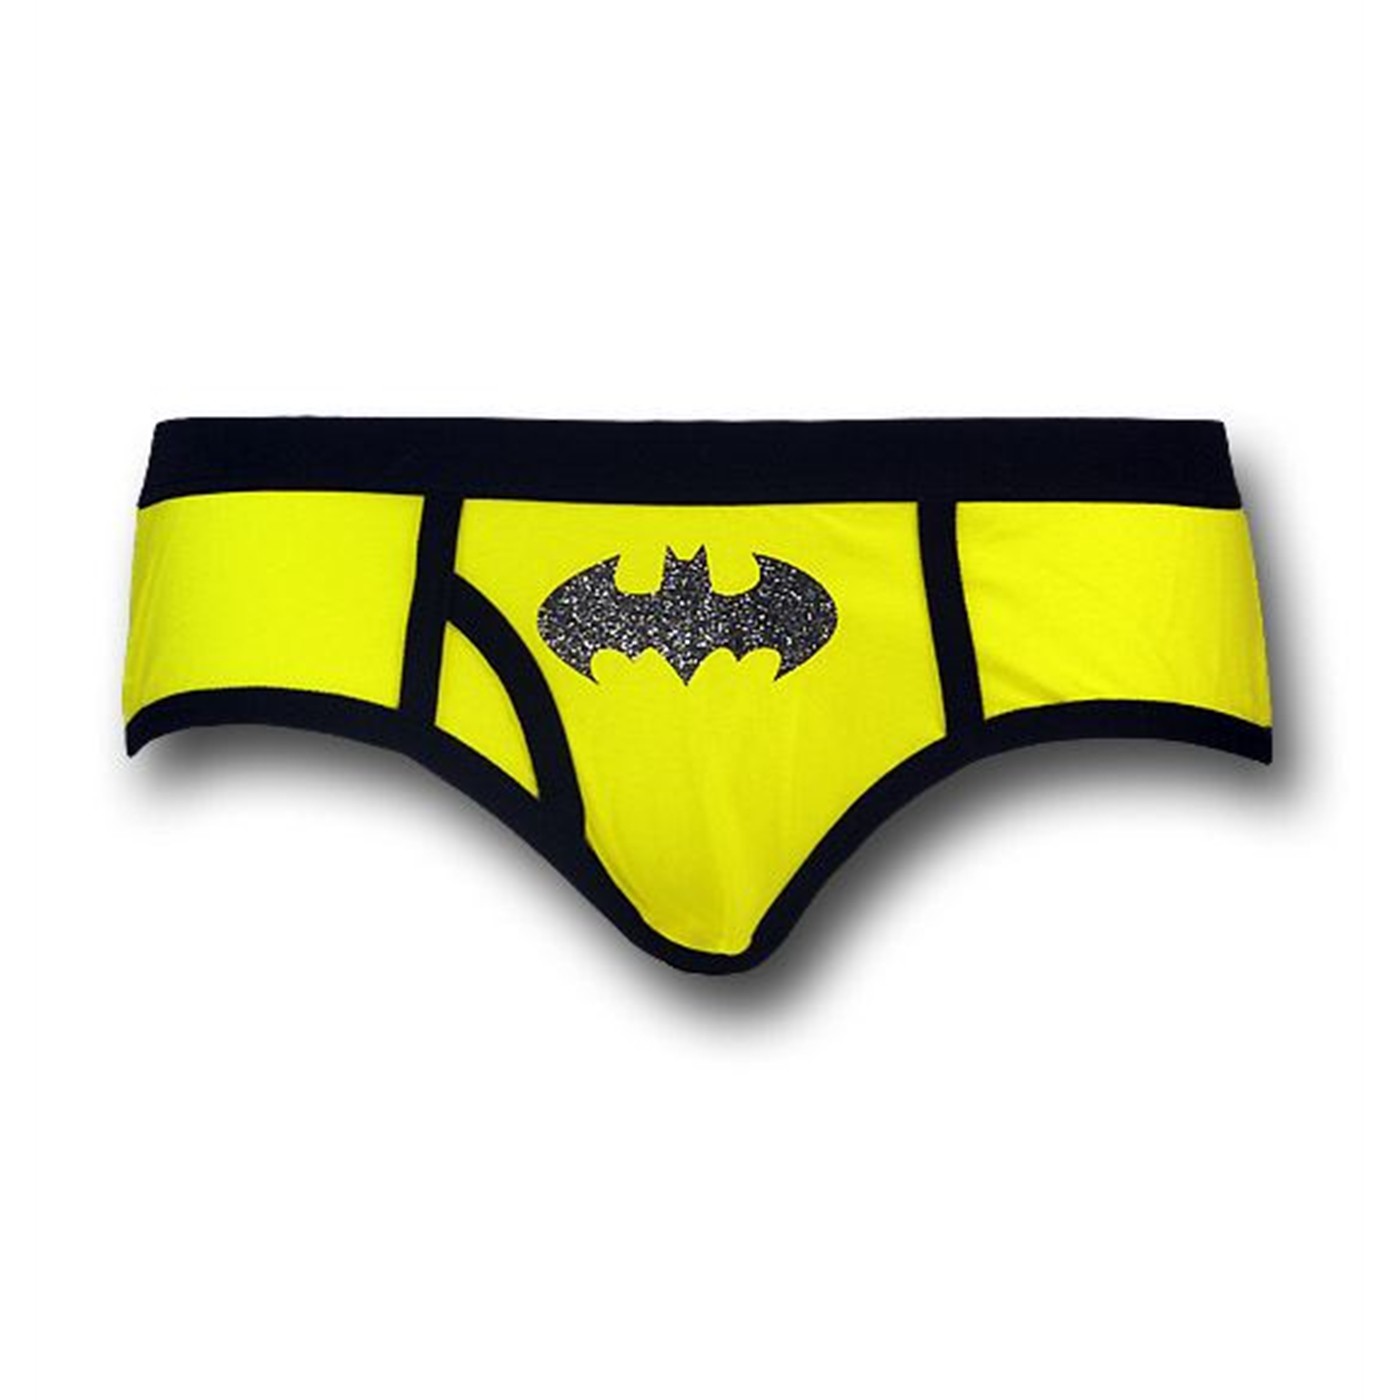 Underoos Girls Batgirl Batman Underwear Tank Set NWT